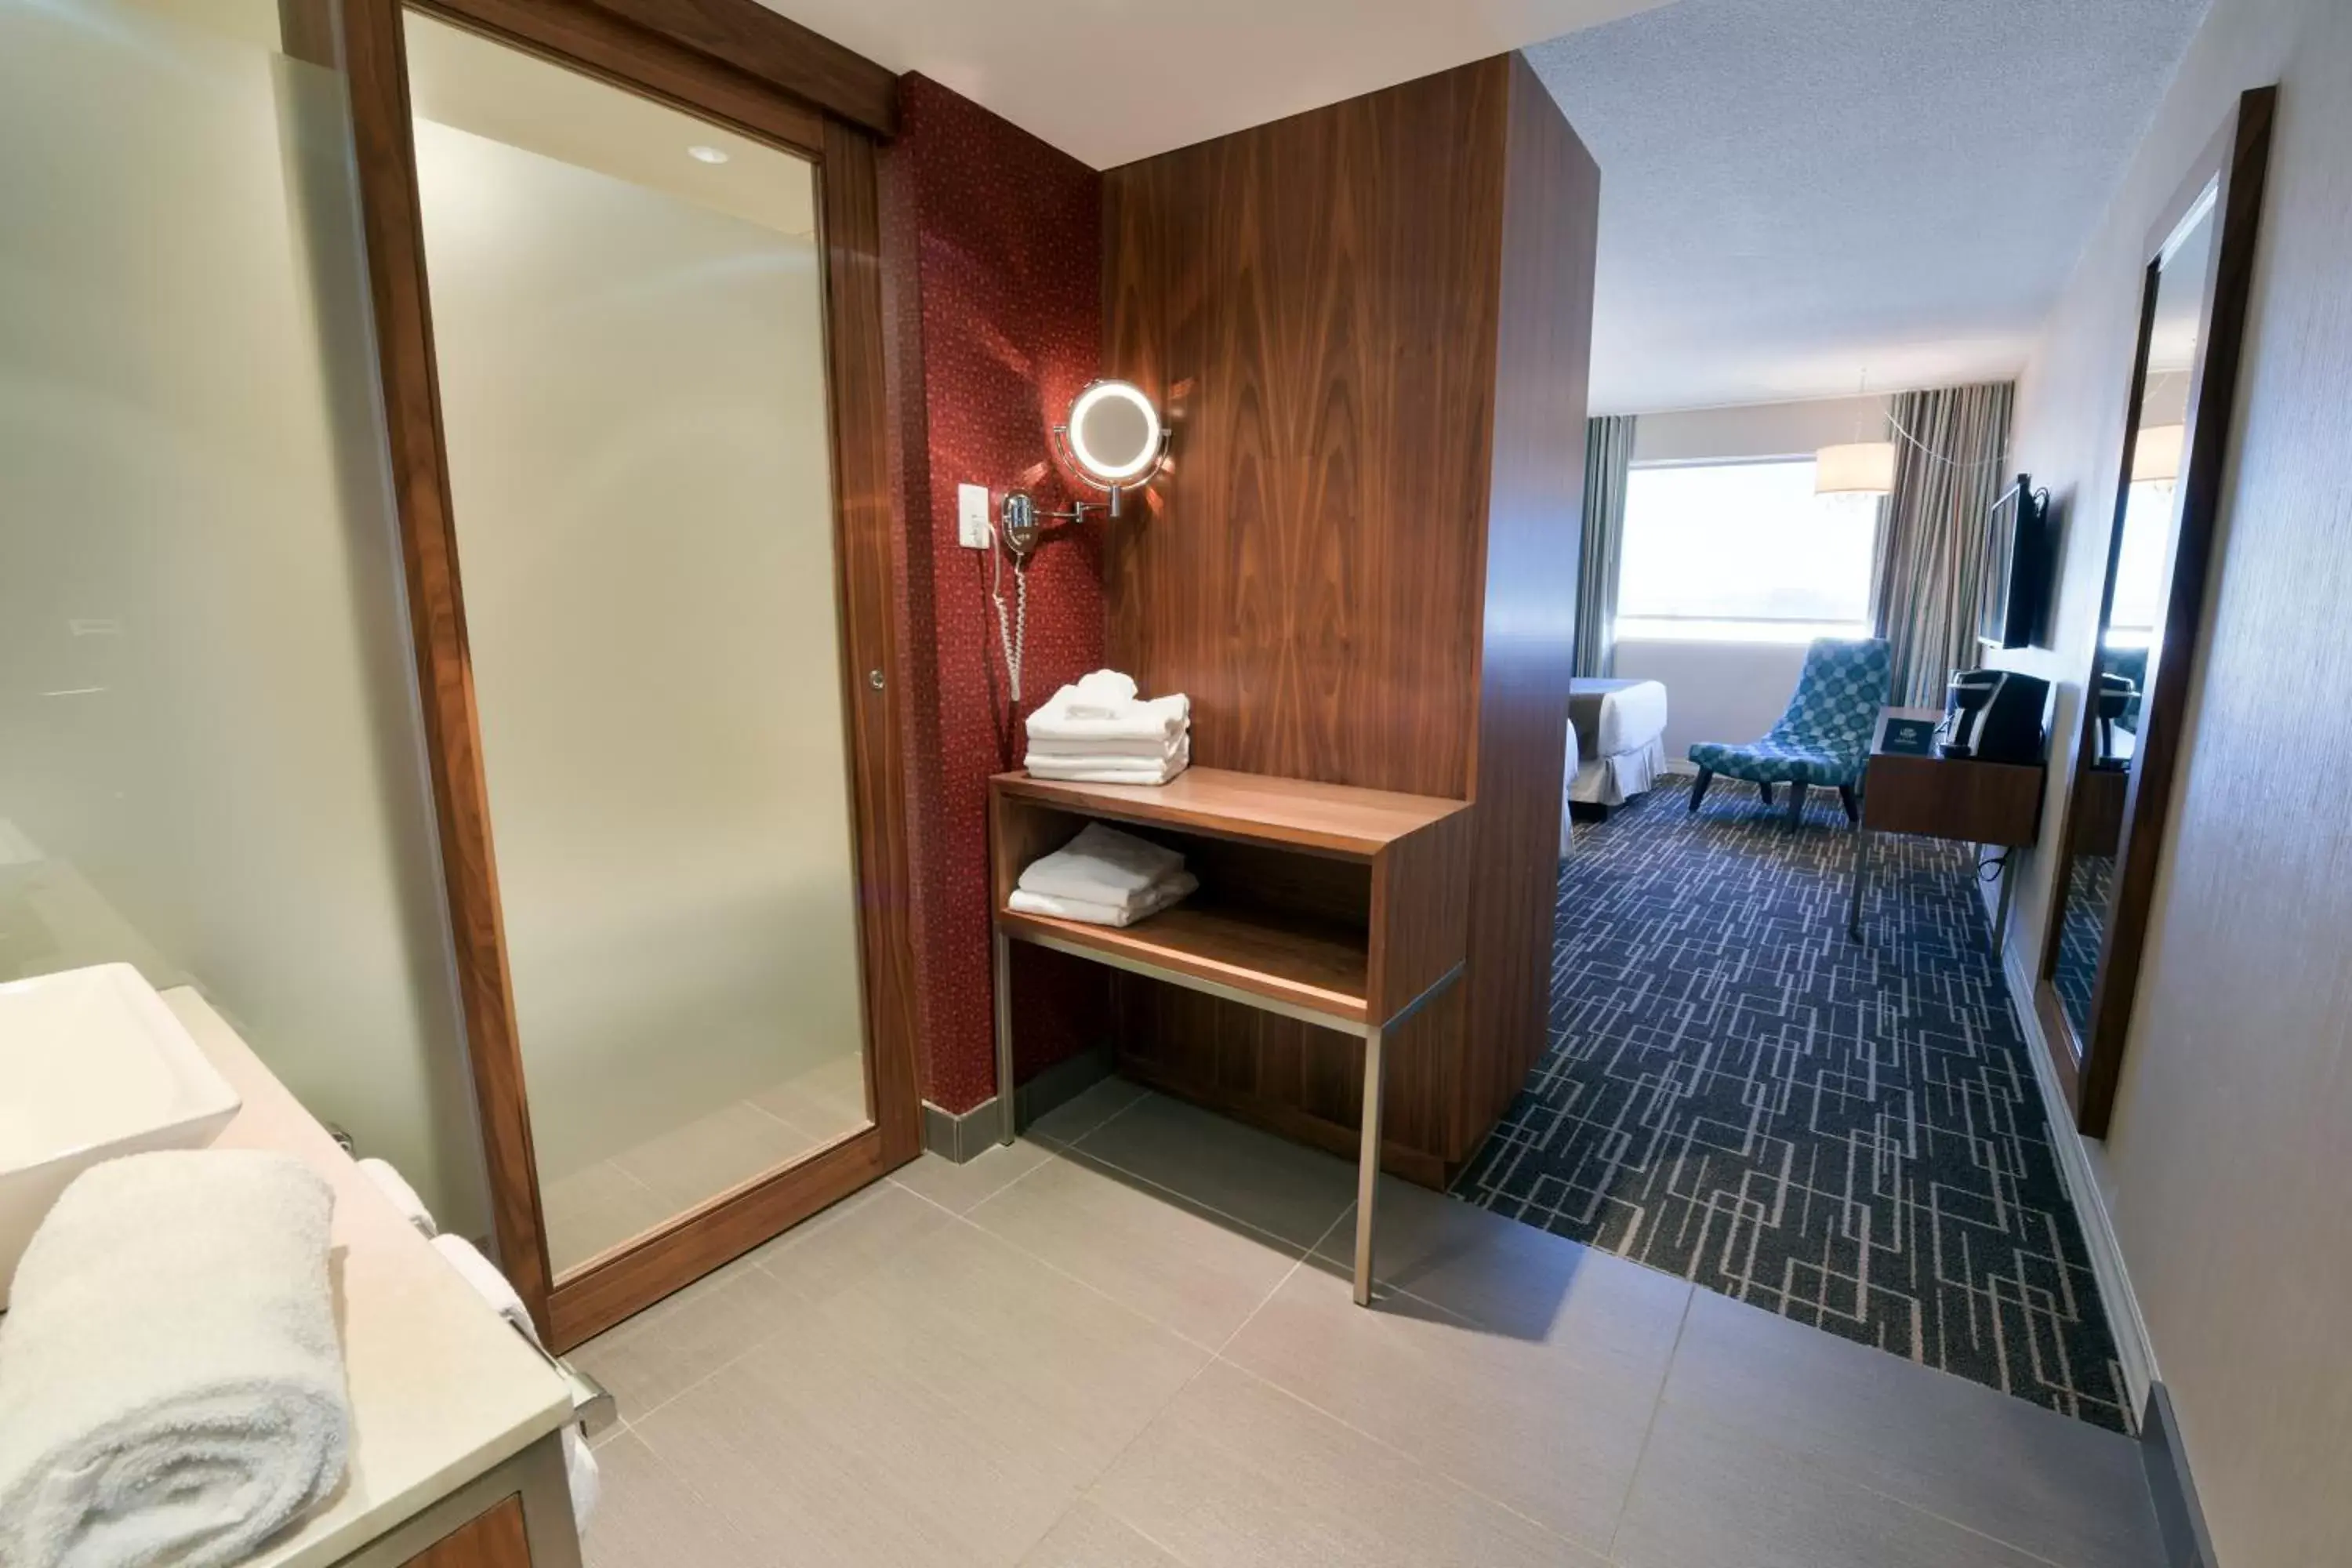 Bathroom in Hotel Universel Montréal